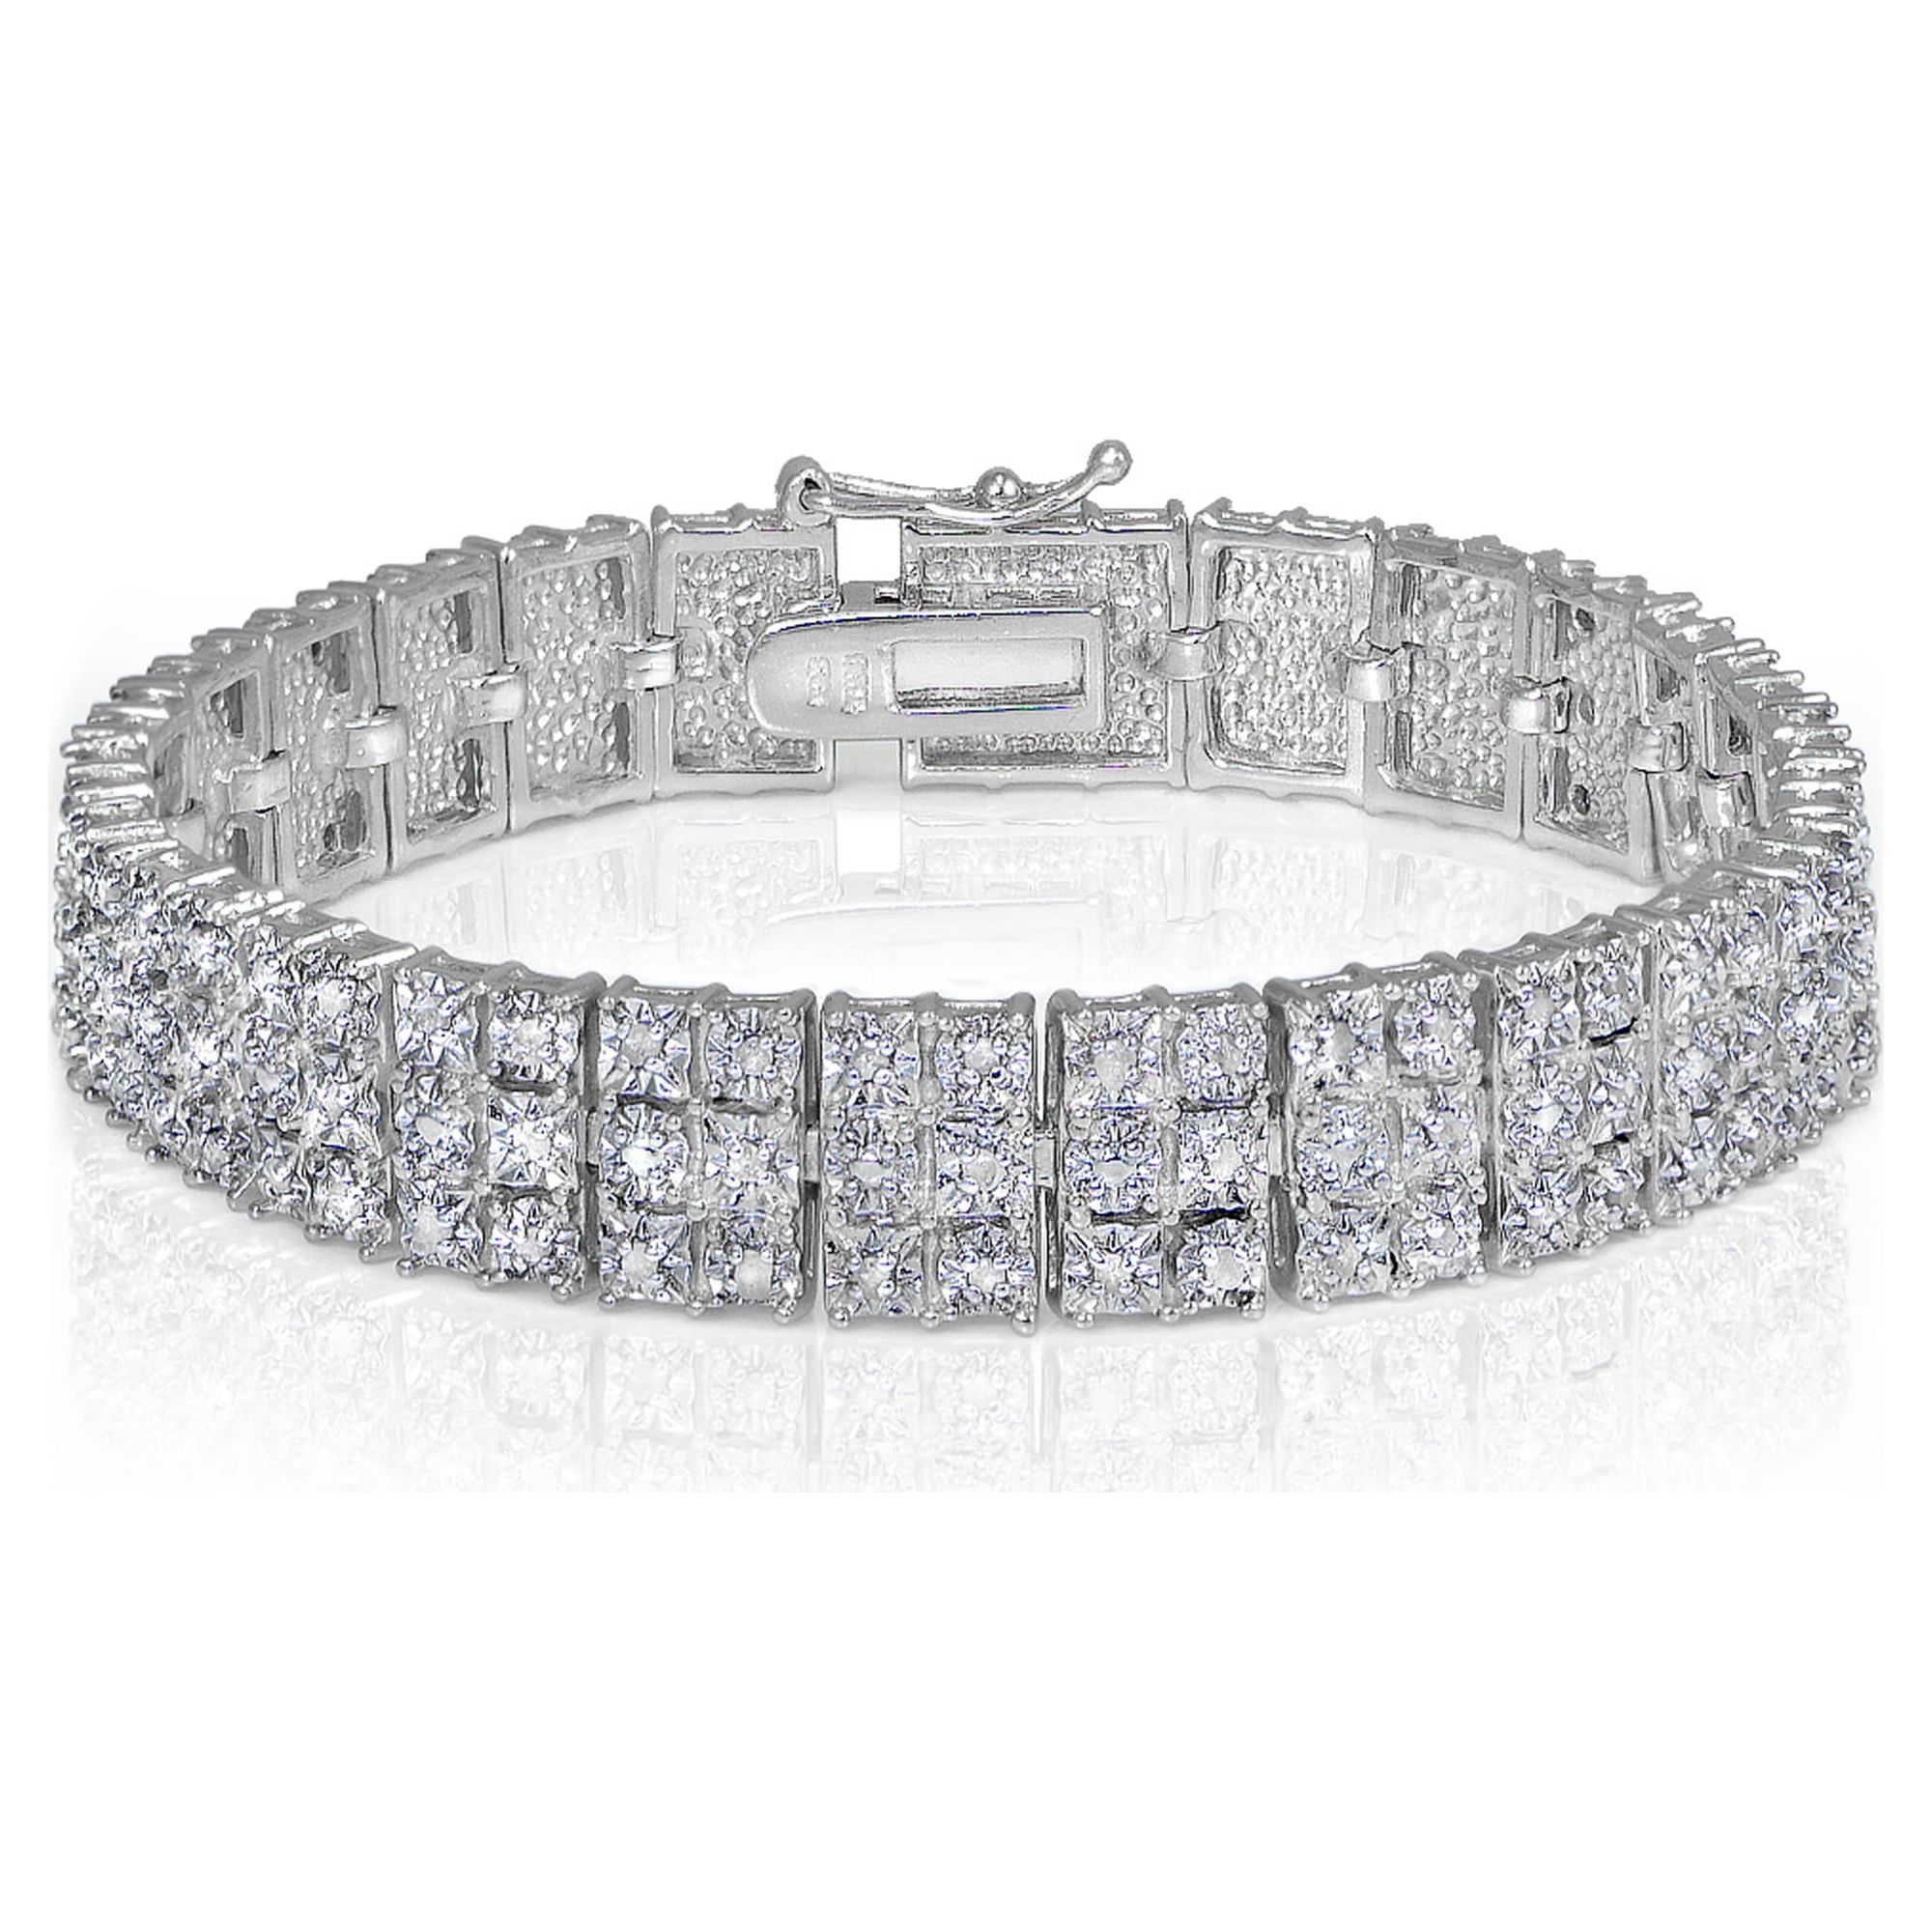 1 Carat T.W. Diamond Silver-Tone Miracle-Set 3-Row Tennis Bracelet - image 1 of 4